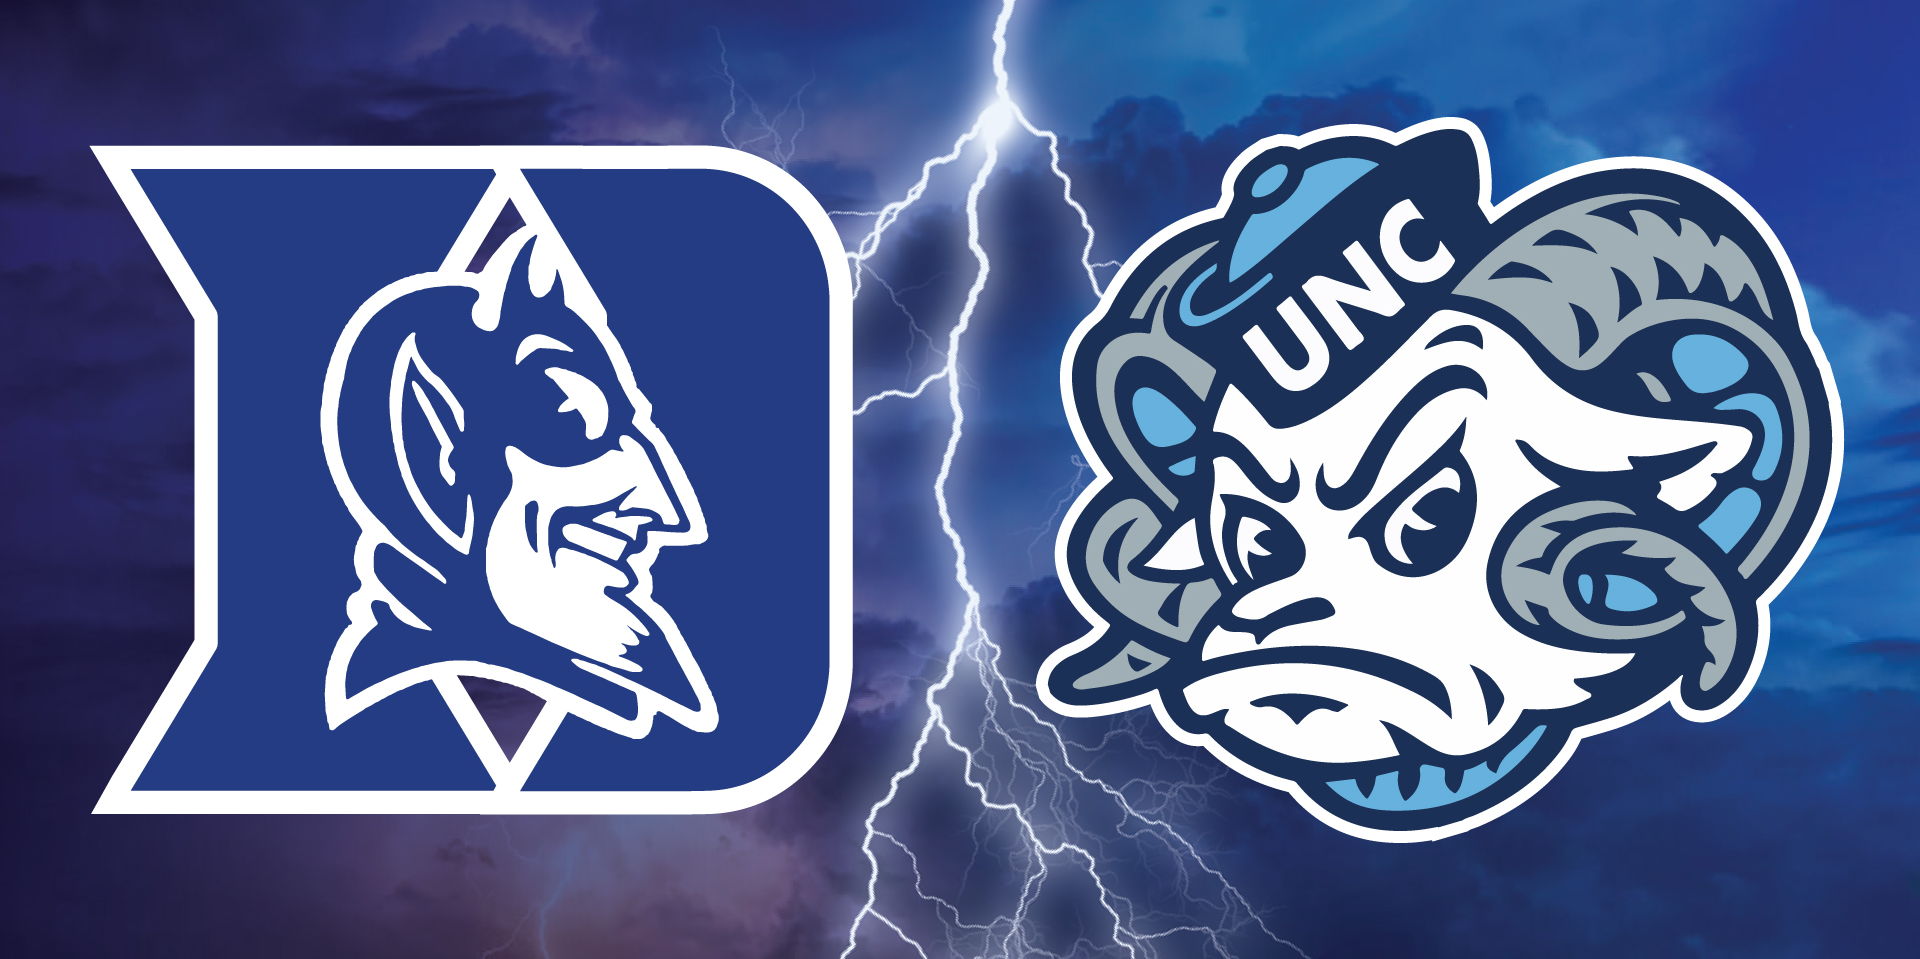 UNC vs Duke Basketball Watch Party promotional image